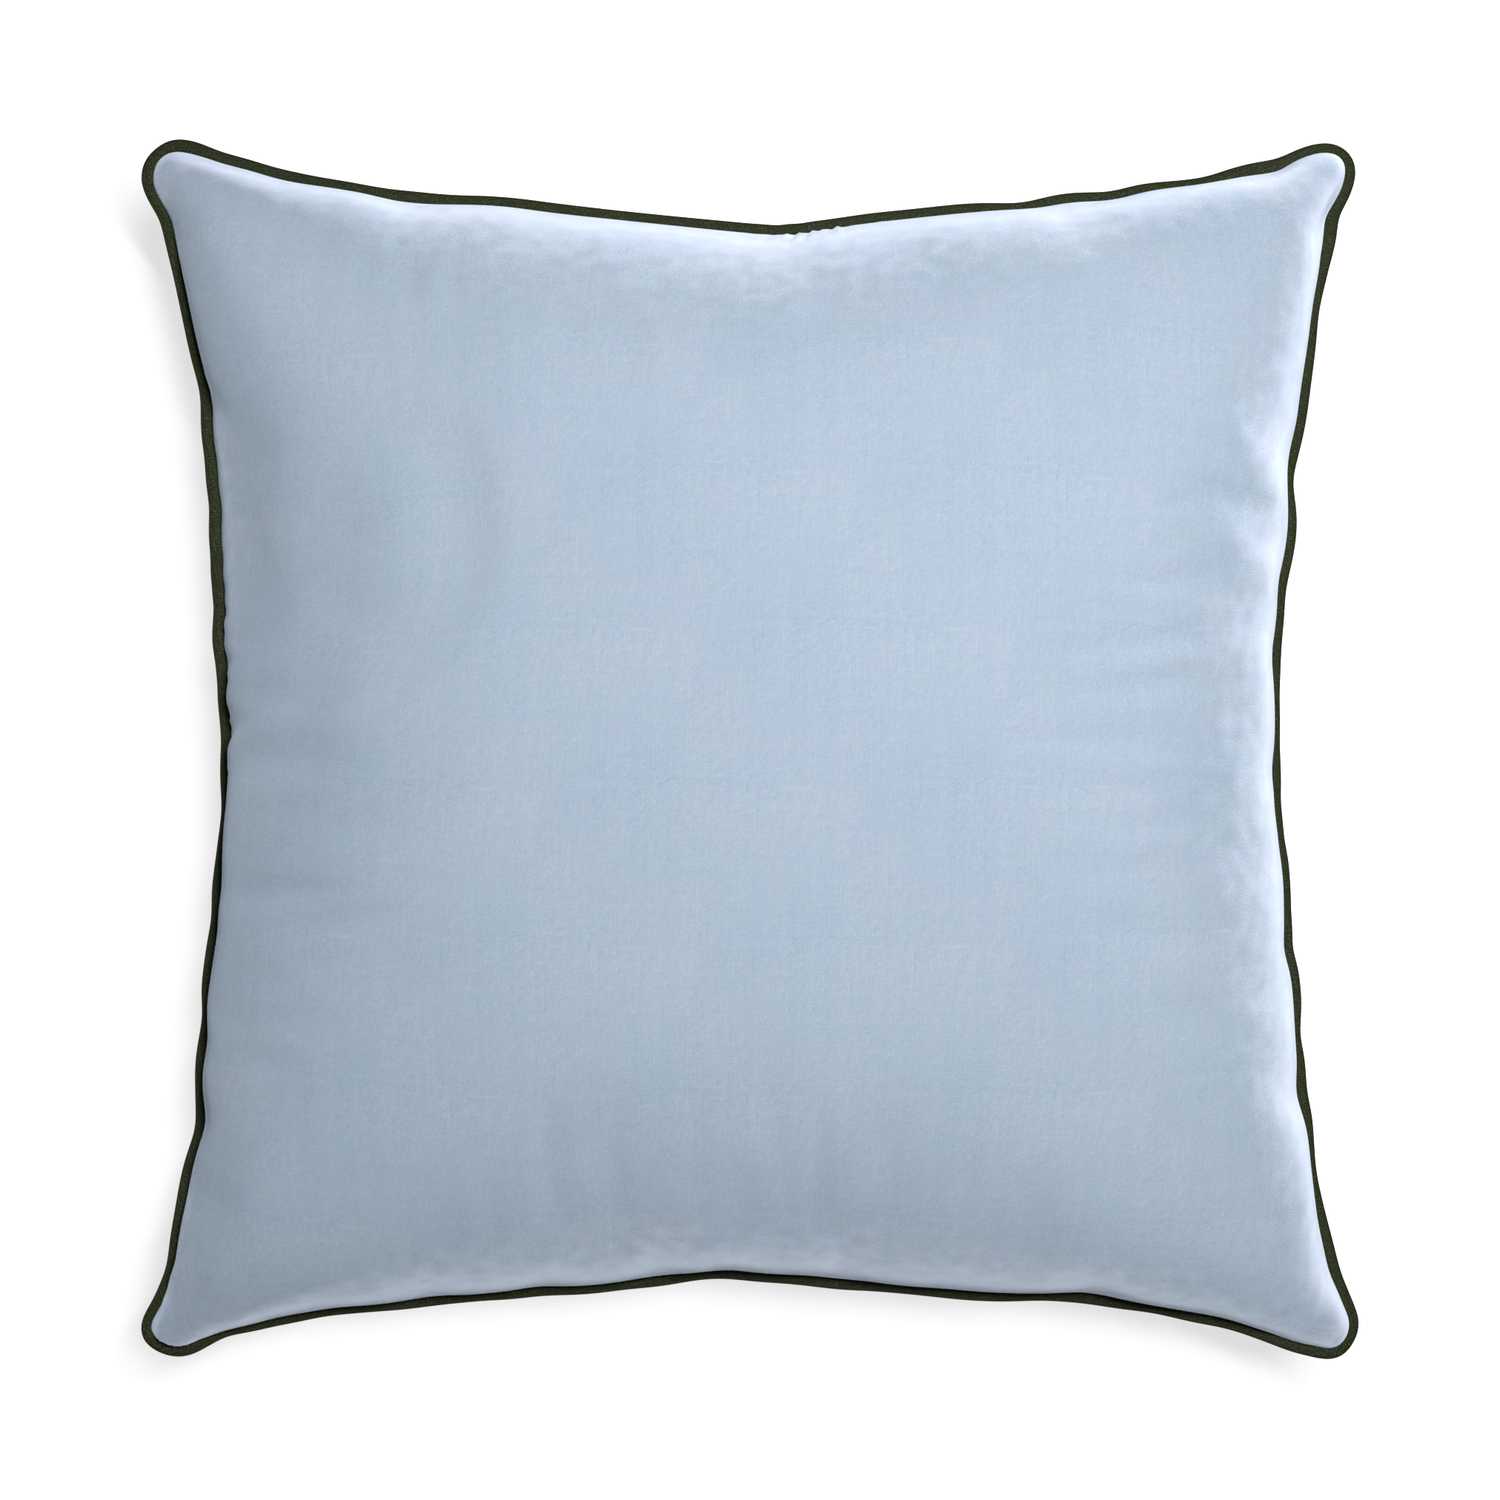 square light blue velvet pillow with fern green piping